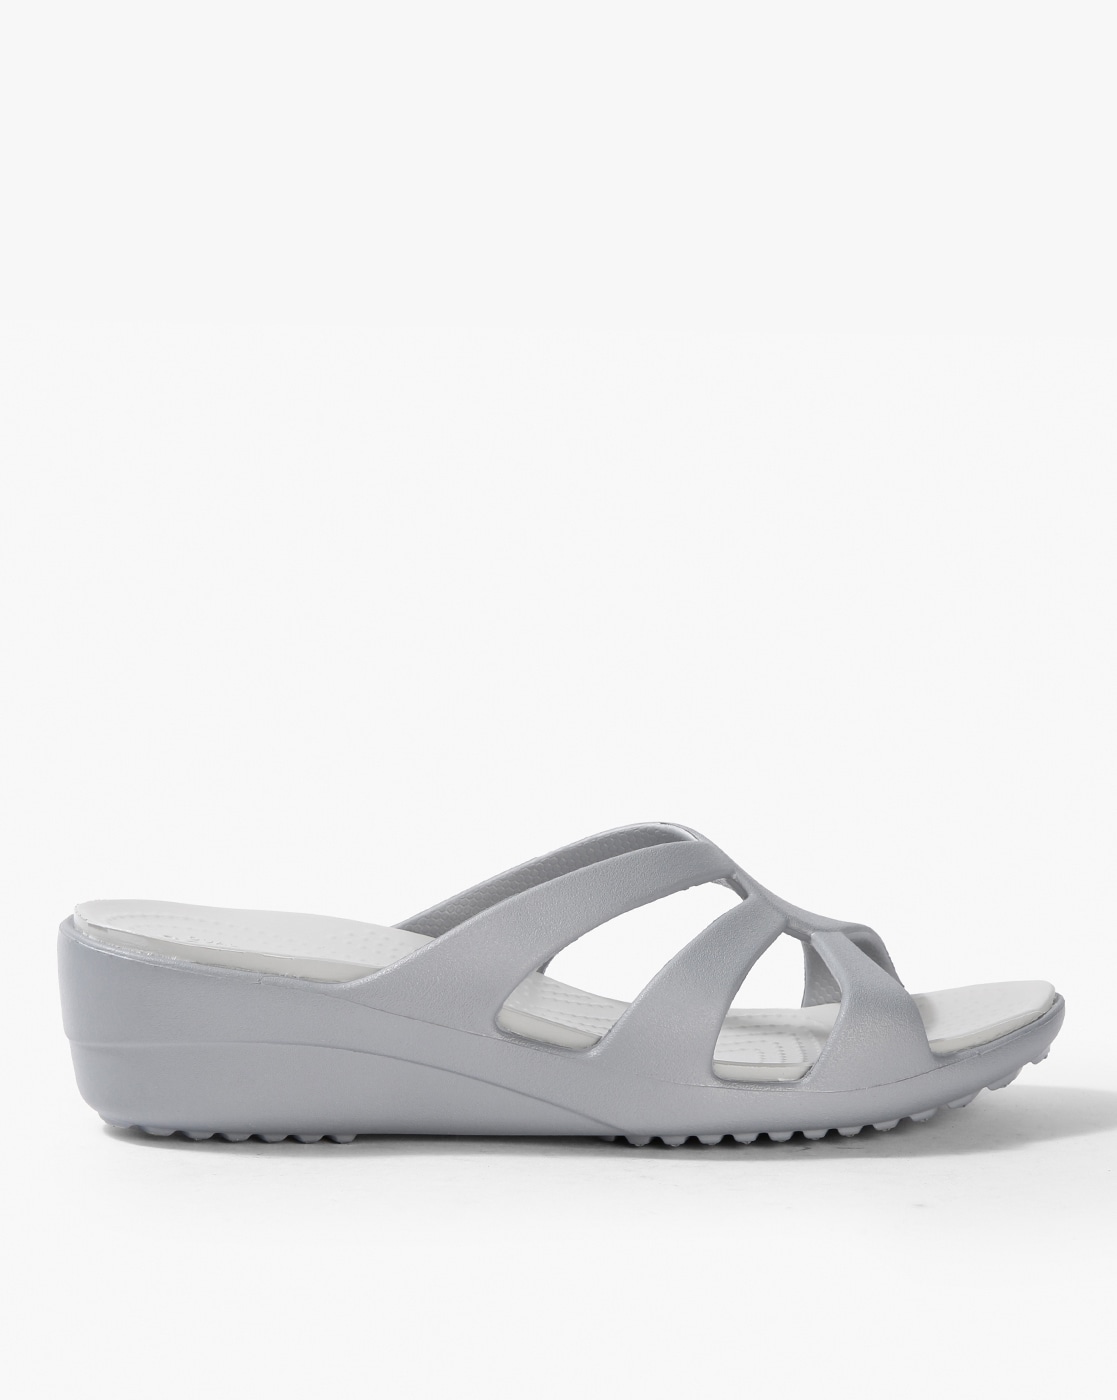 crocs sandals heels